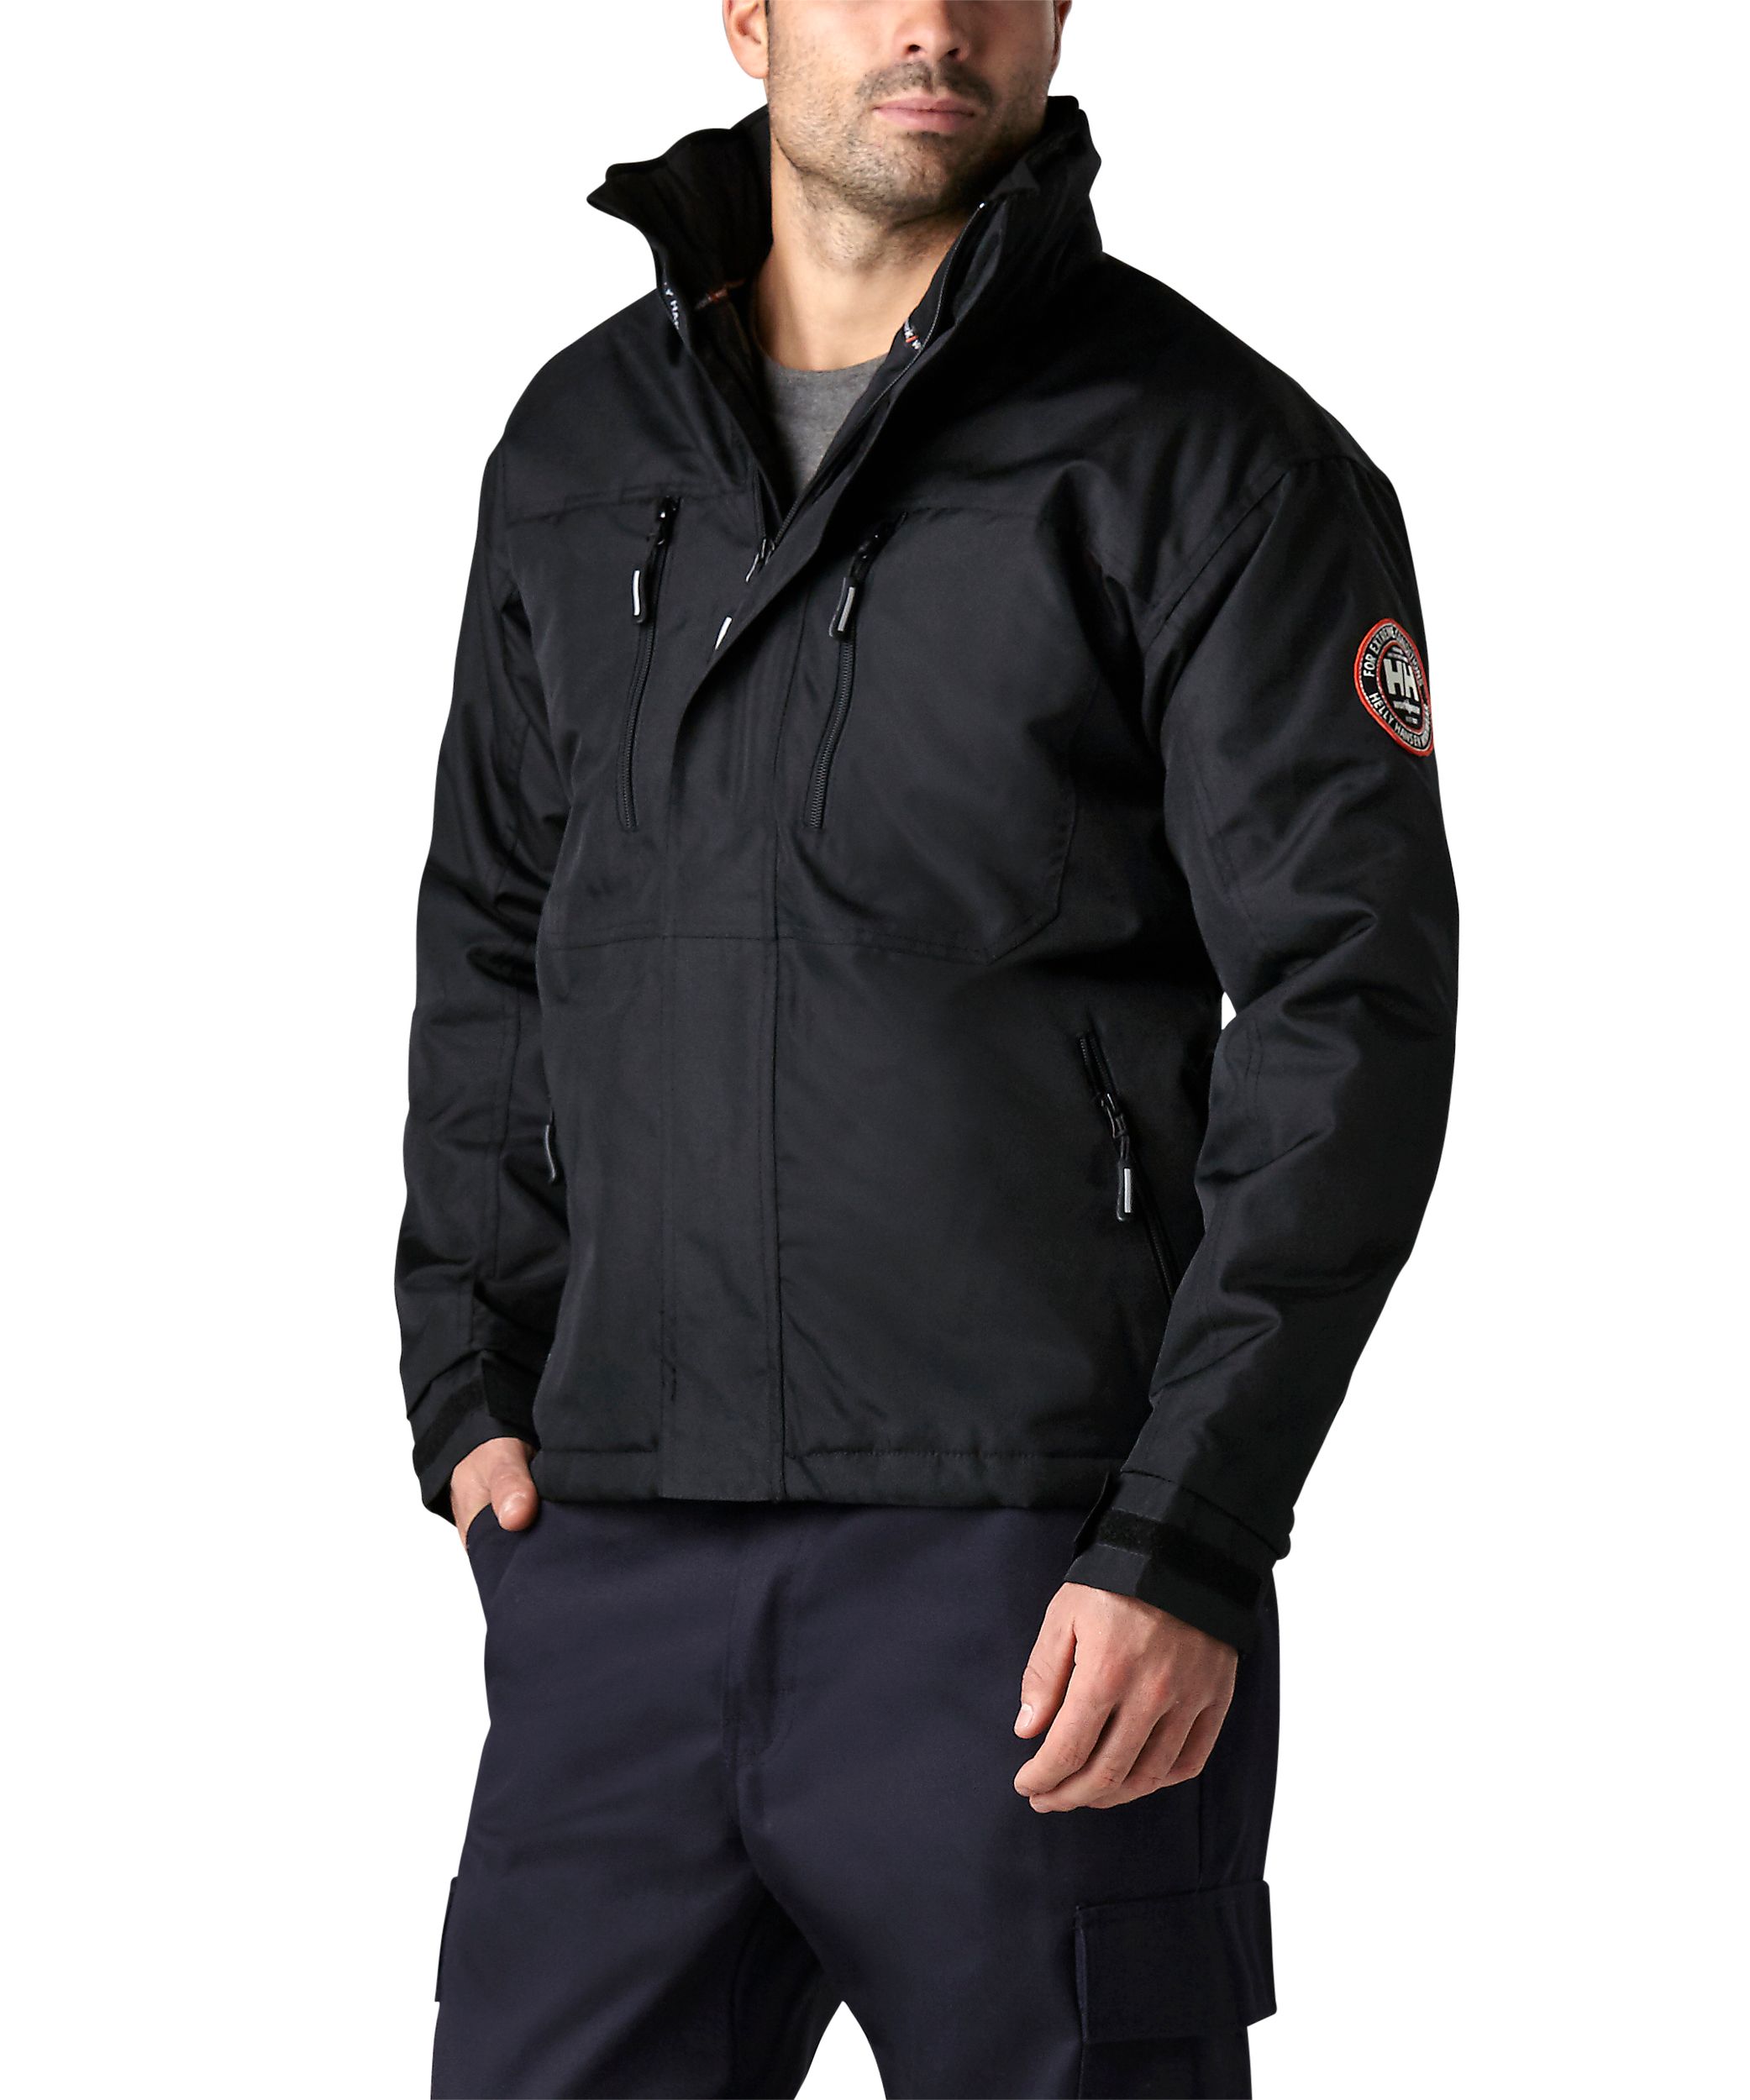 Berg Insulated Winter Work Jacket, HH Workwear US